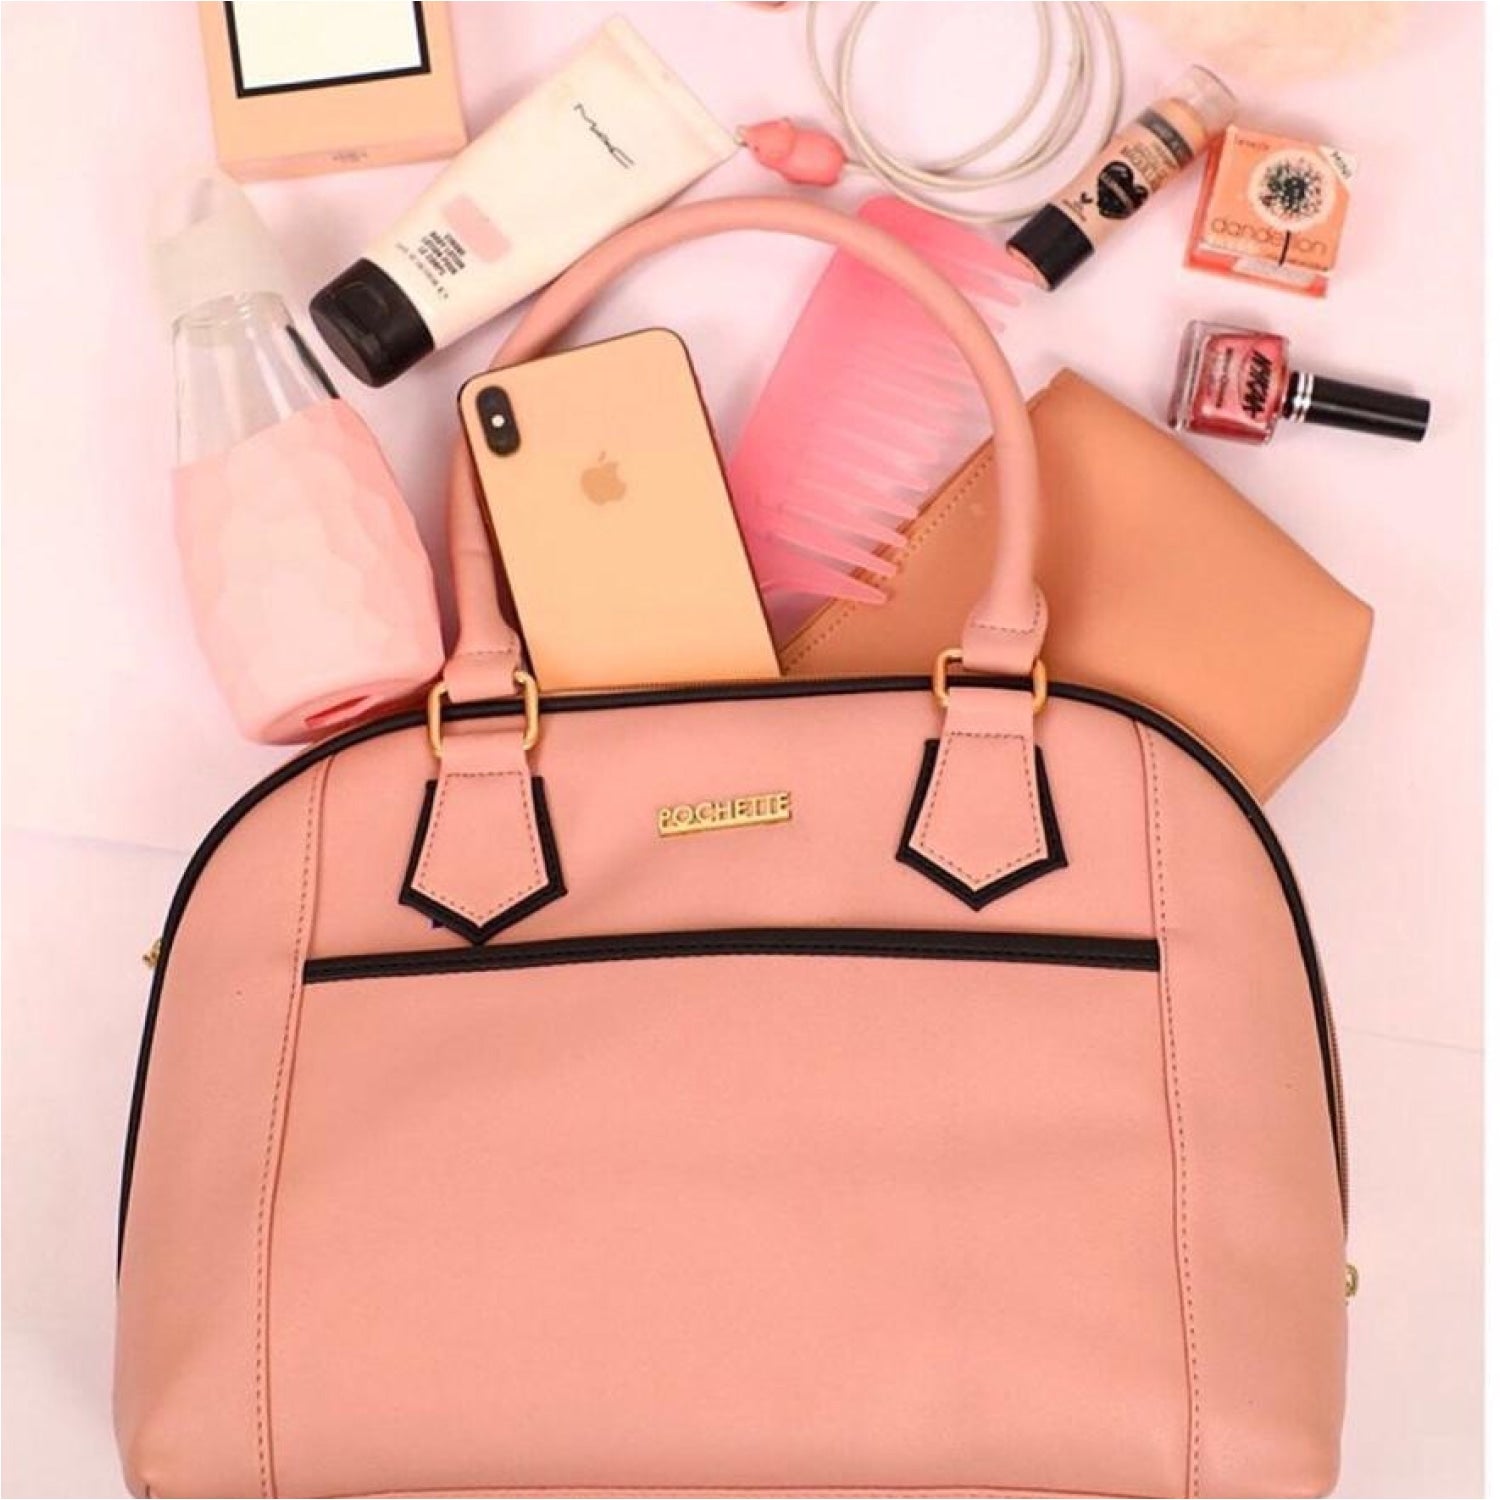 Pochette Flamingo Handbag. - HANDBAGS